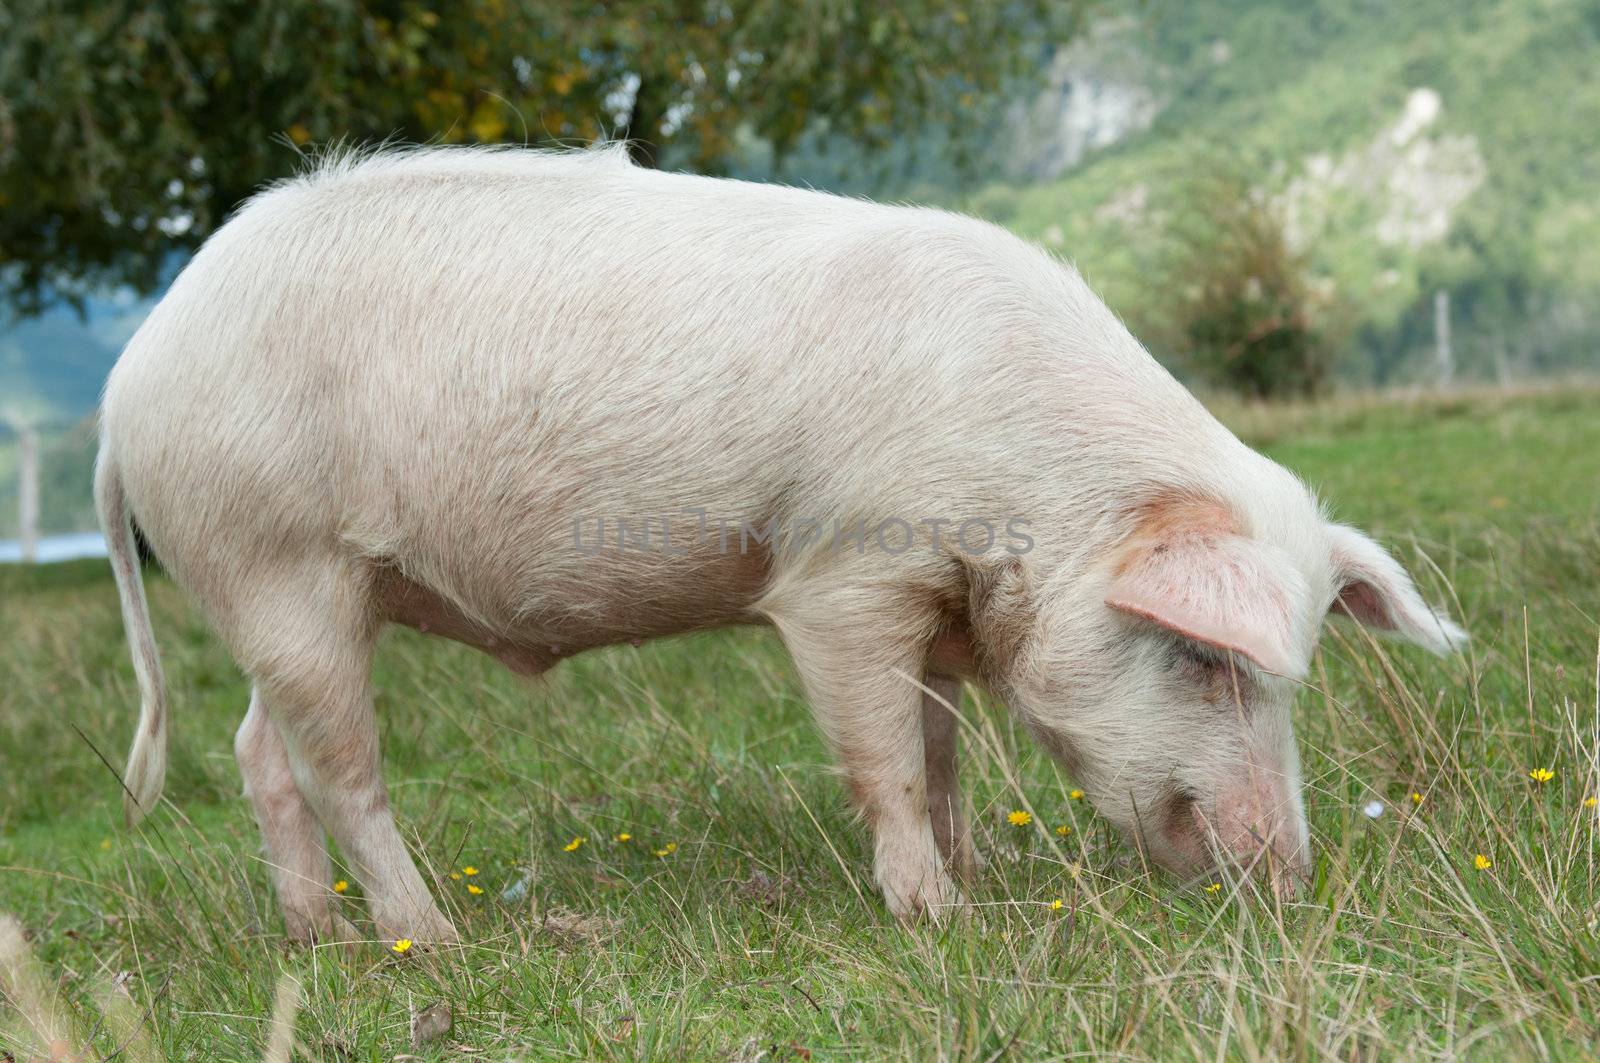 Closeup on pig eating by bigmagic